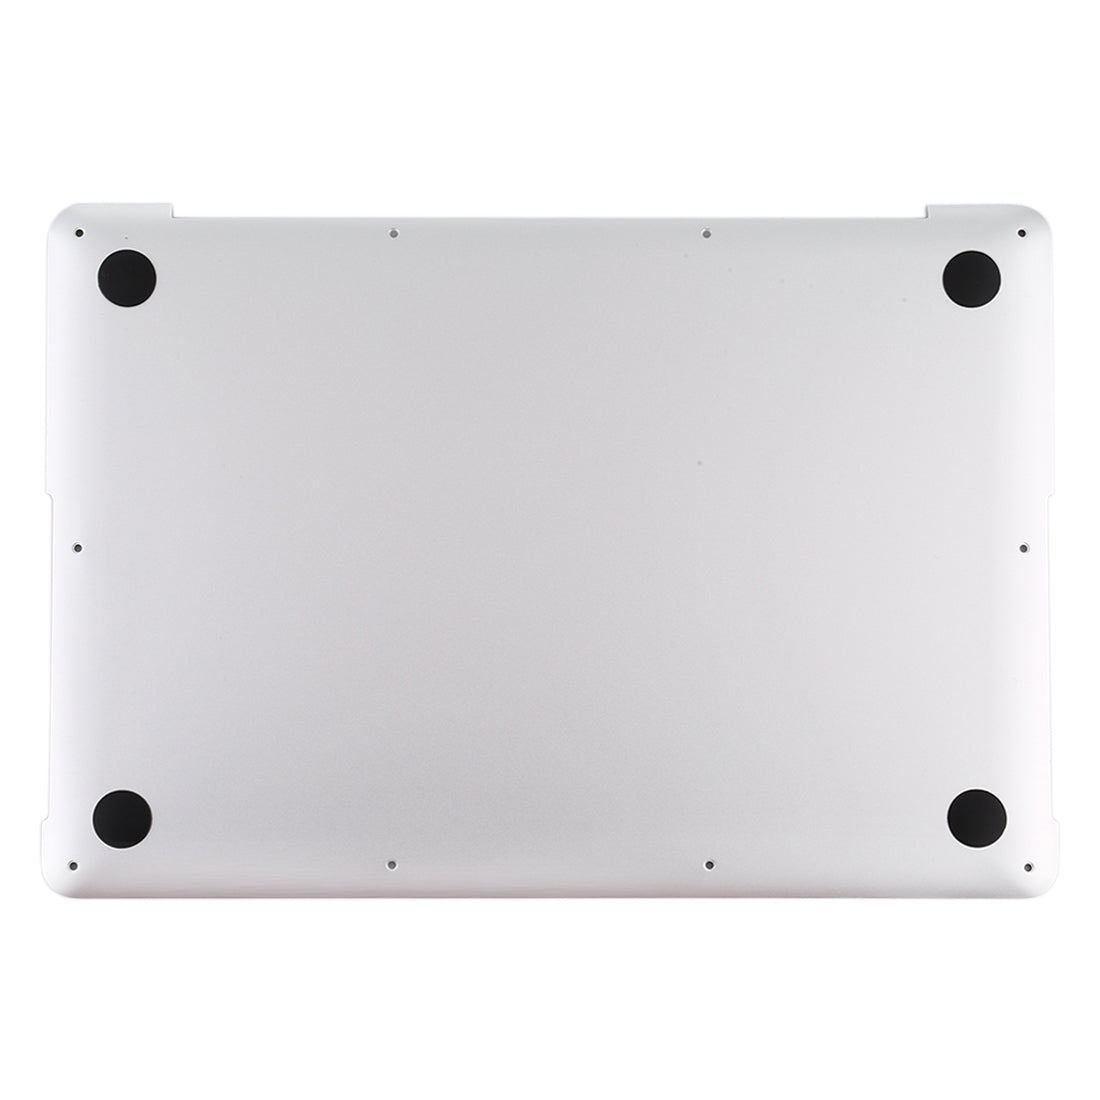 Bottom Cover Lid Apple MacBook Pro Retina 13 A1502 2013 2015 Silver